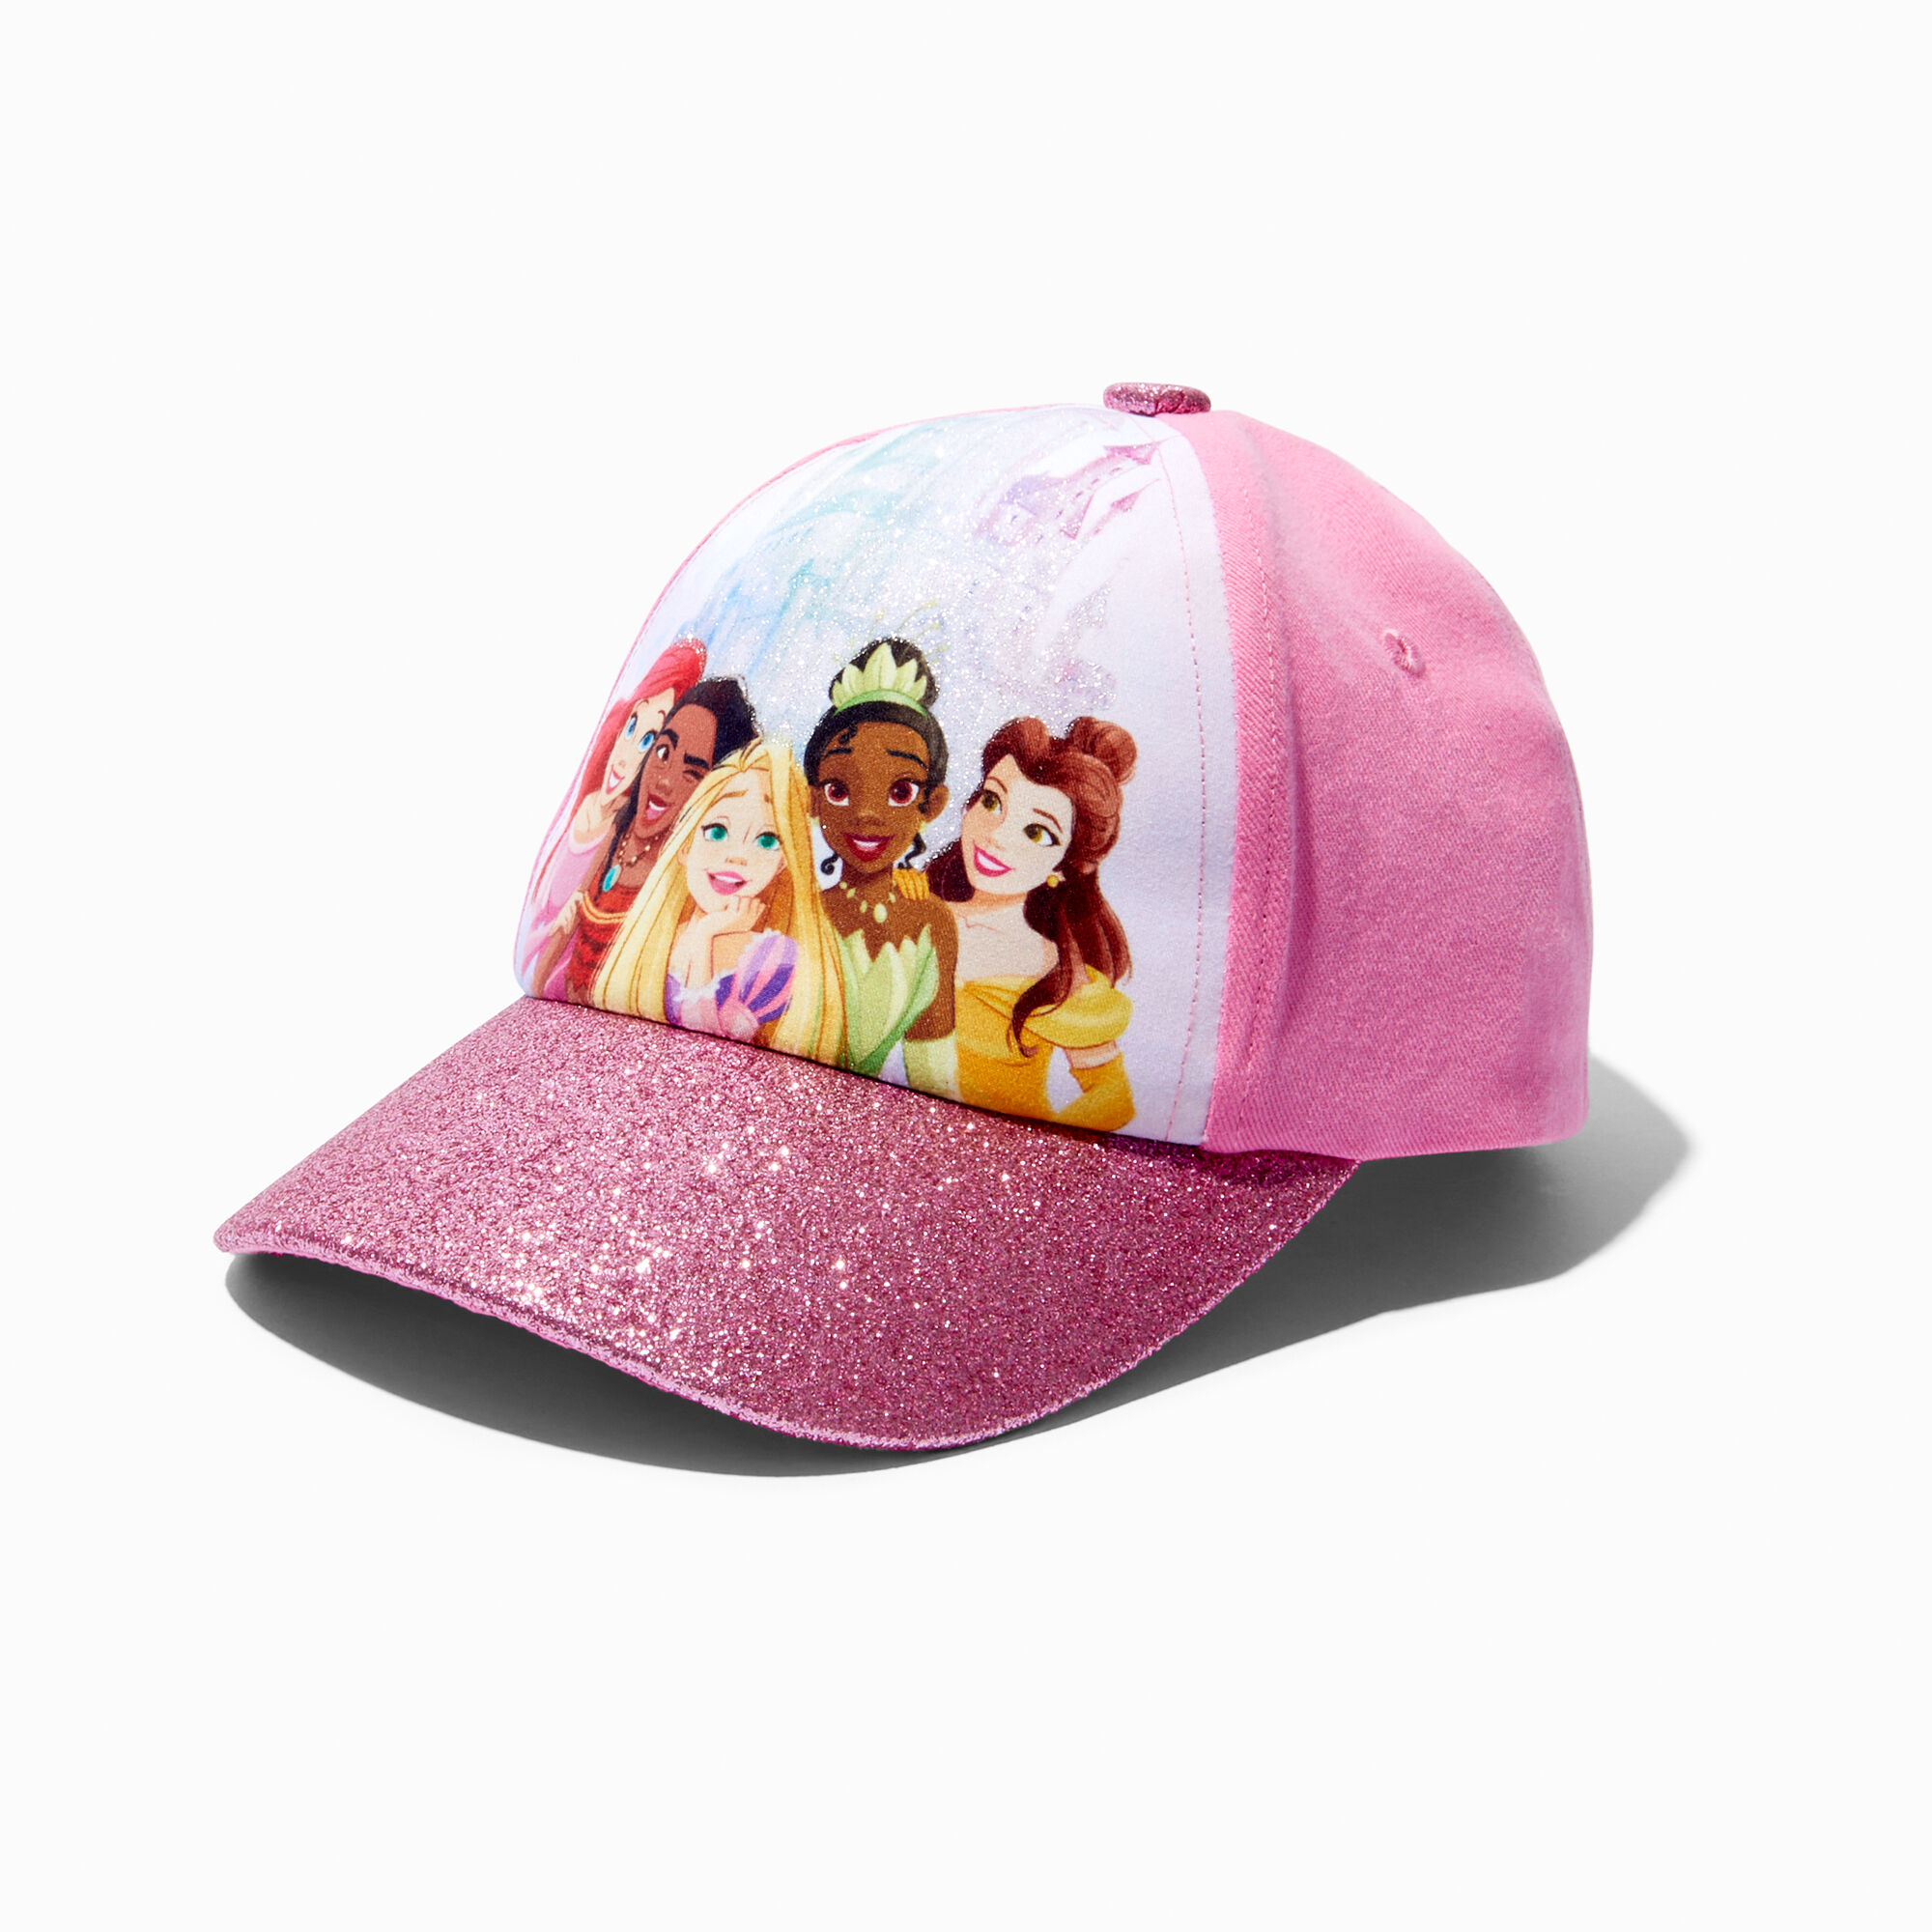 claire's ©disney princess baseball cap